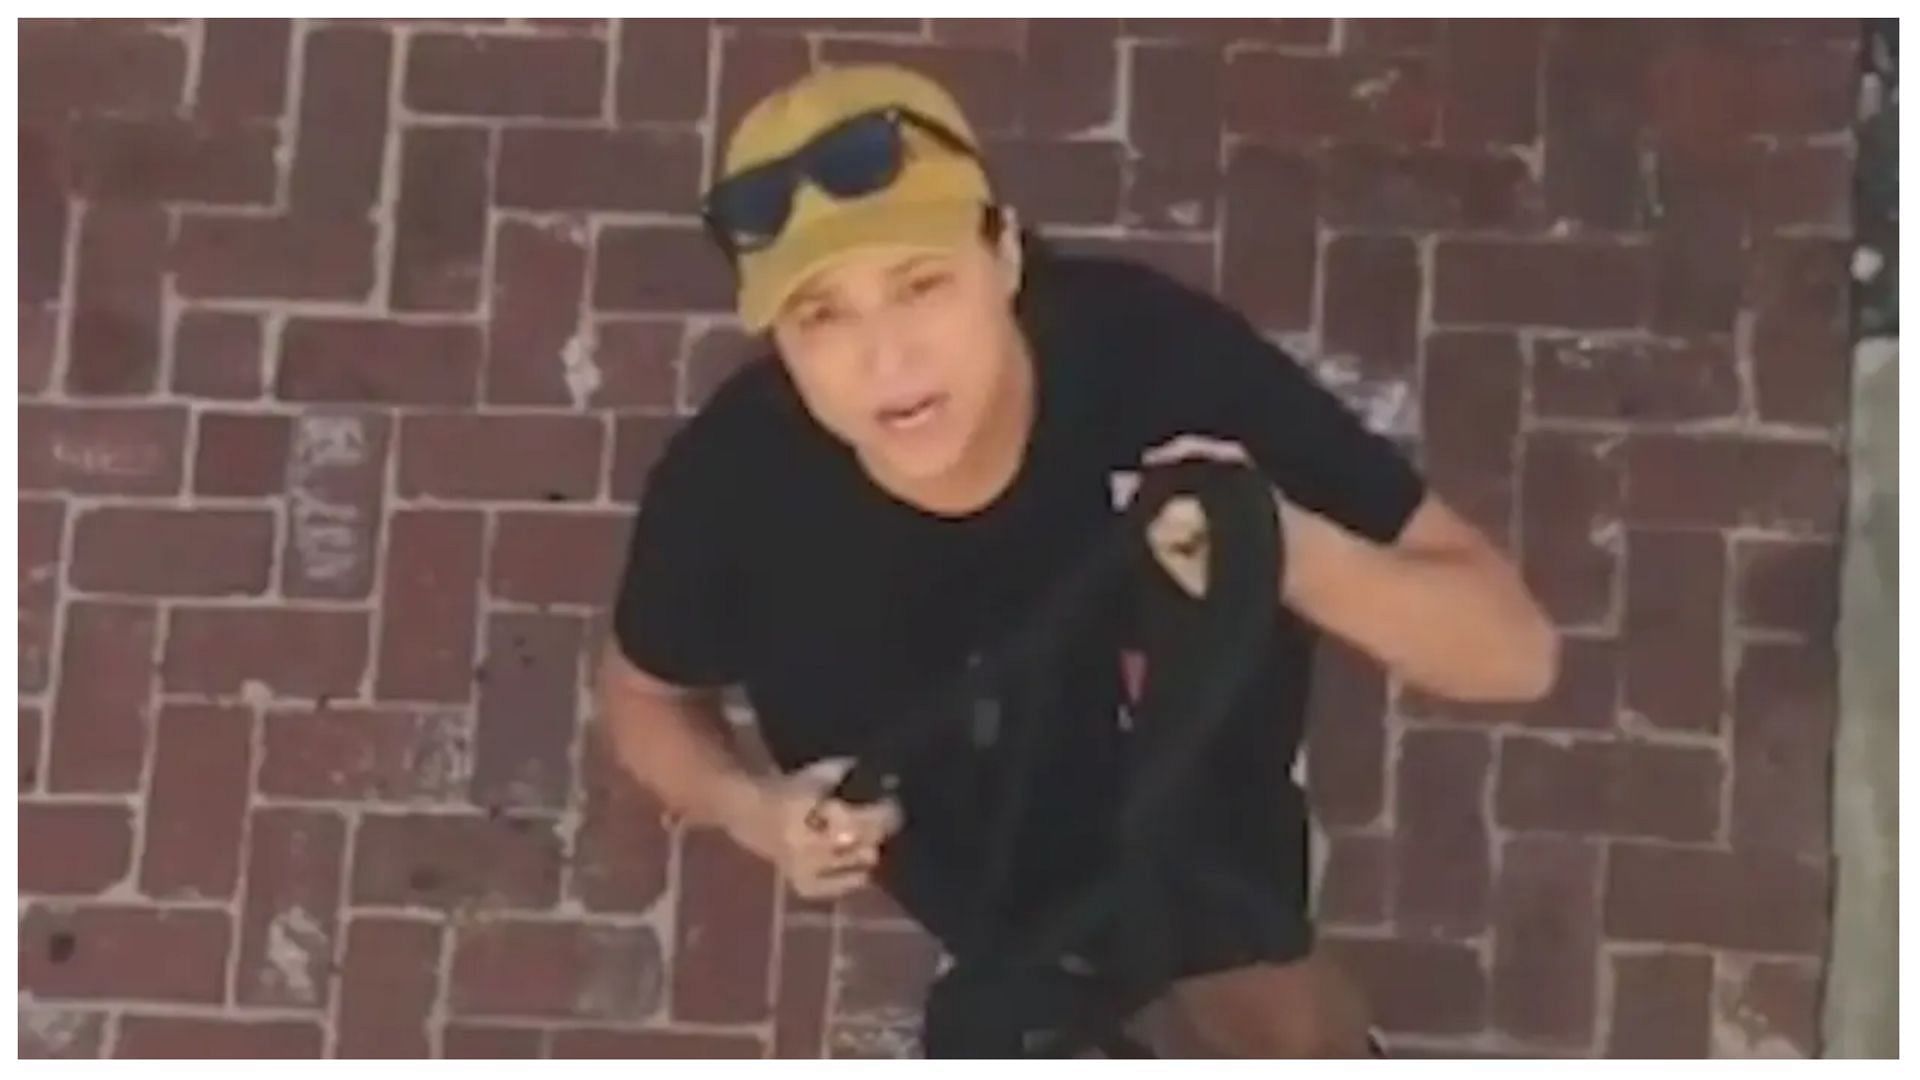 California authorities have accused the woman of threatening her neighbors (image via youtube)